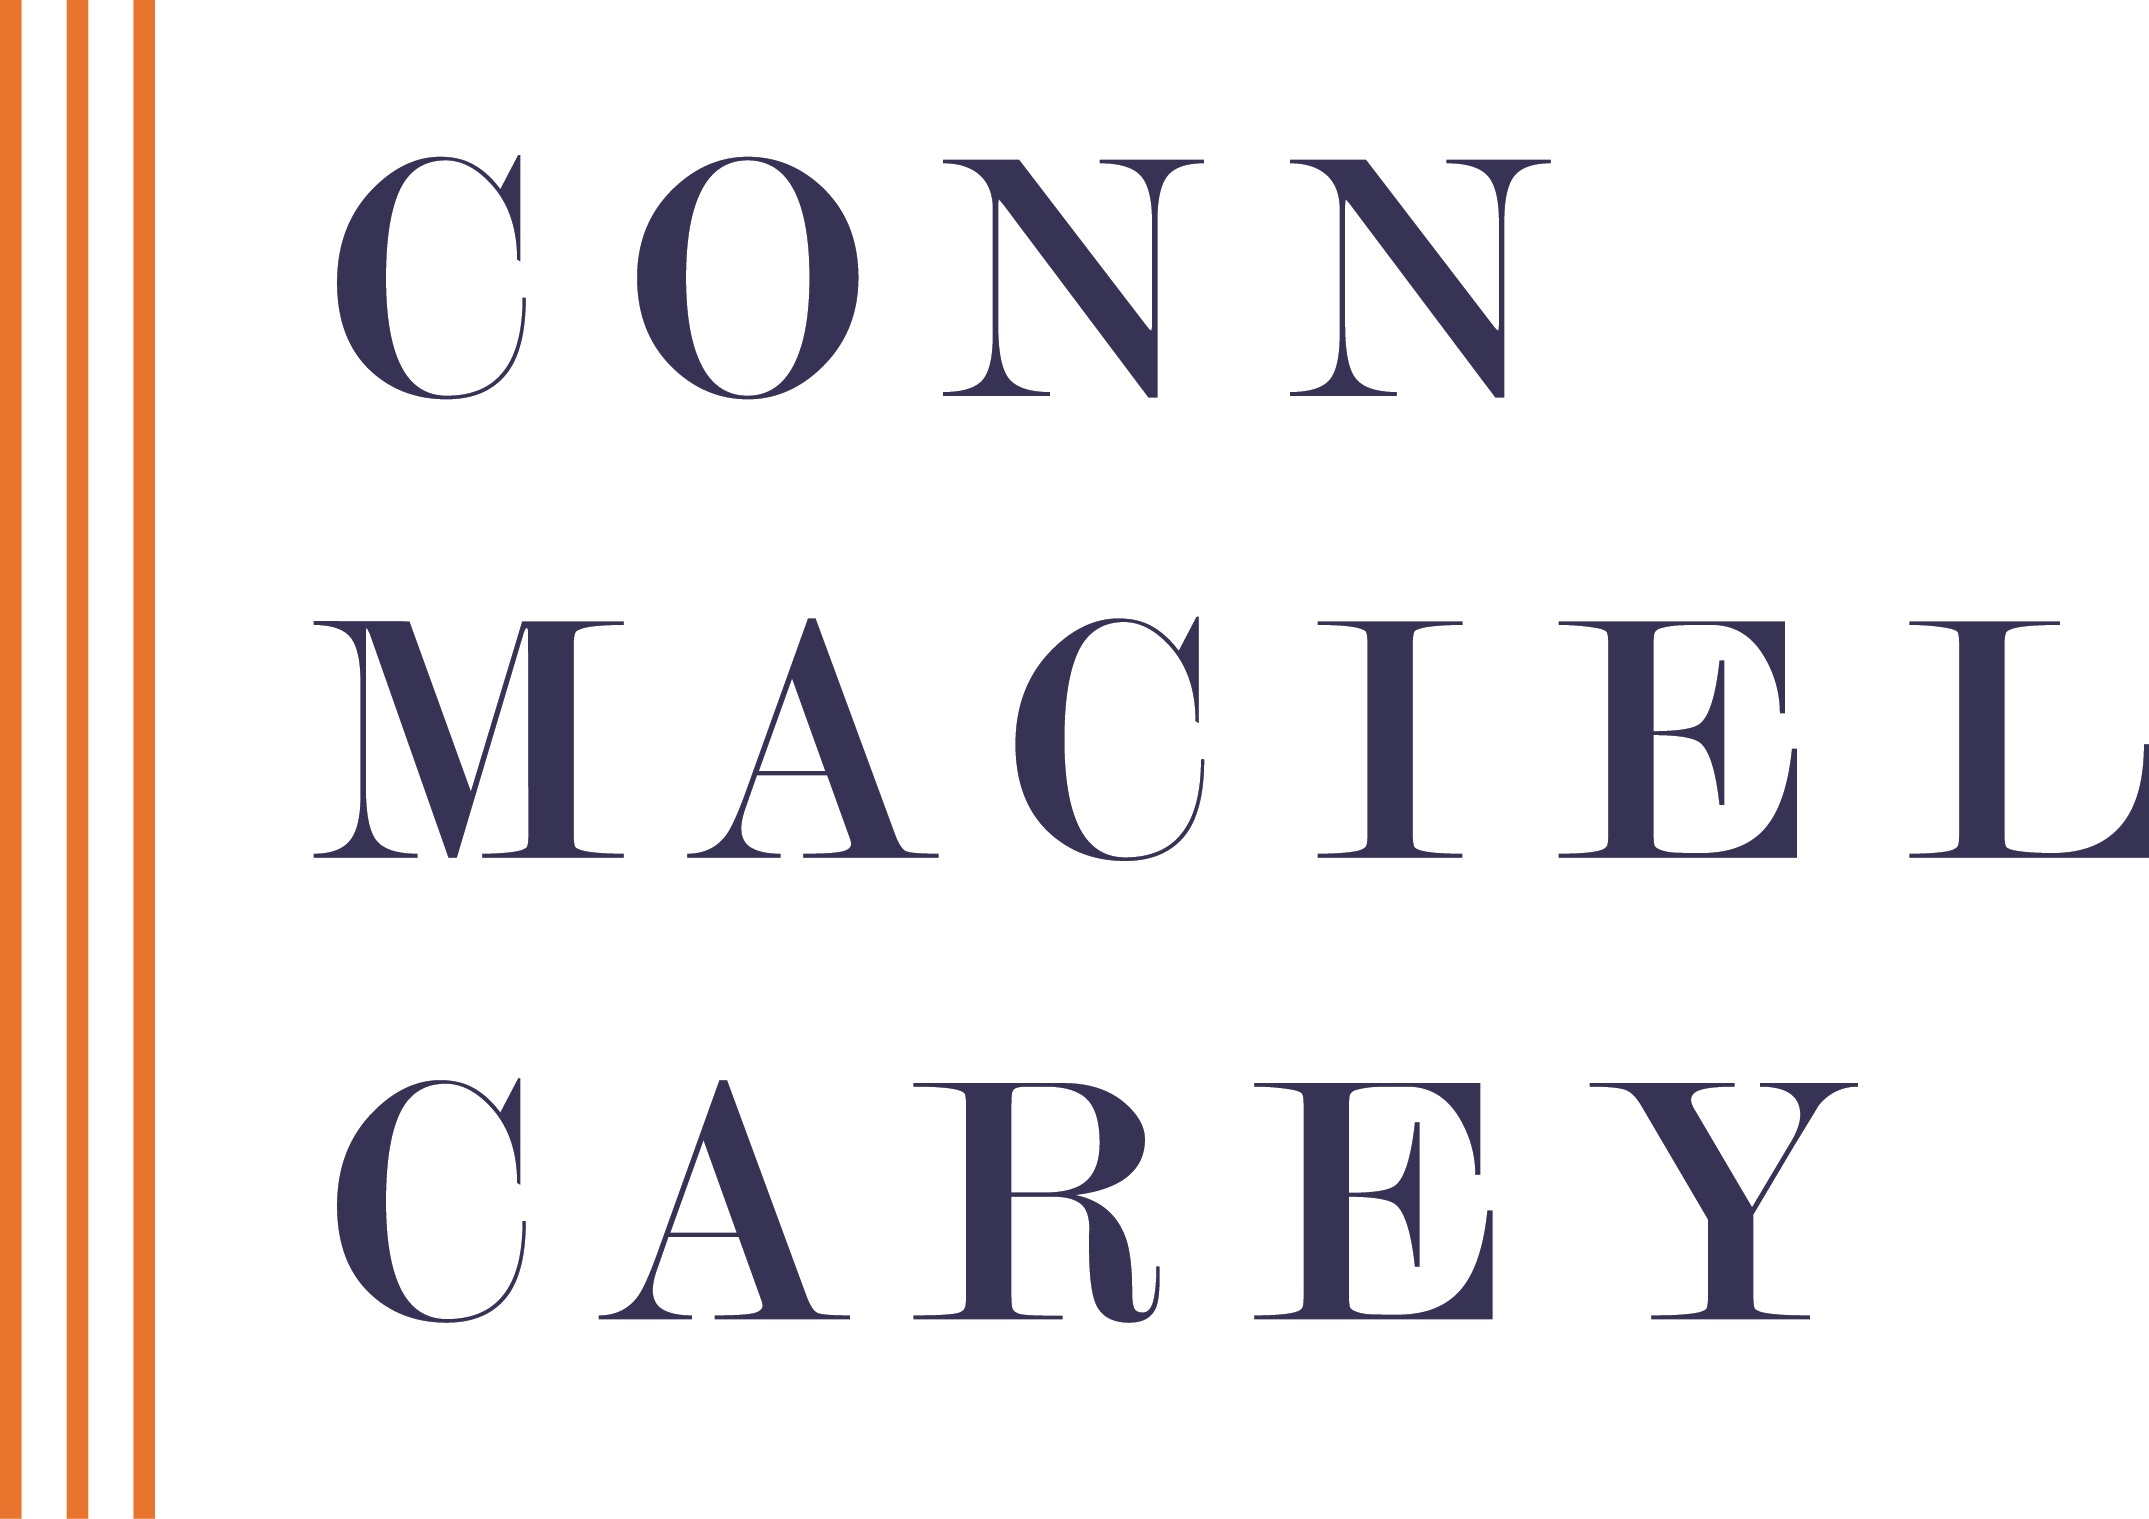 Conn Maciel Carey